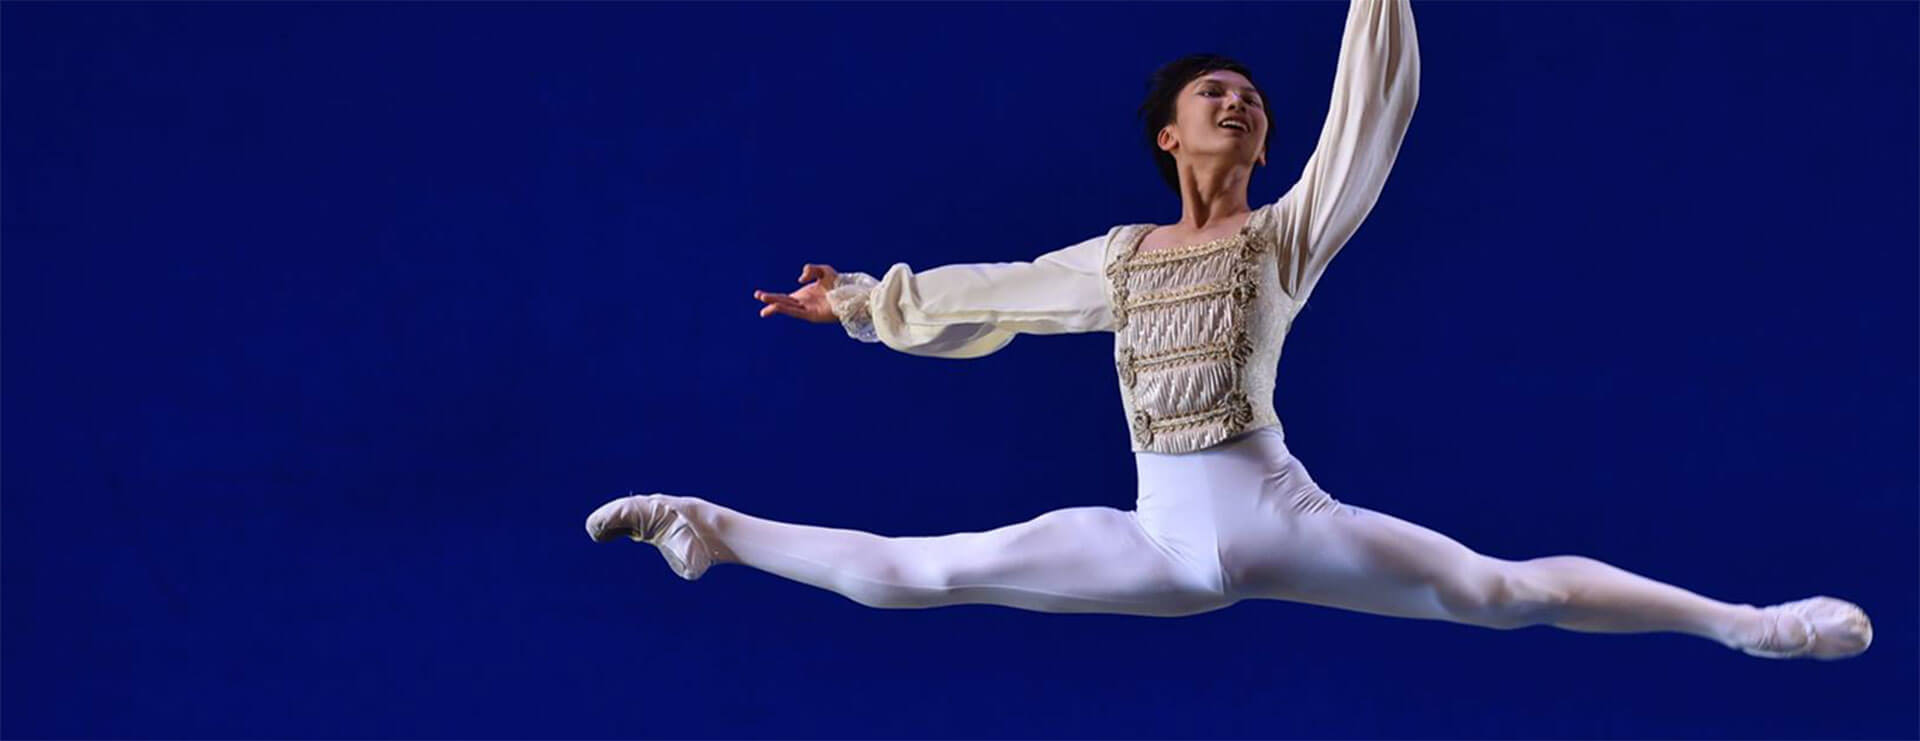 балет мужчины член фото 66